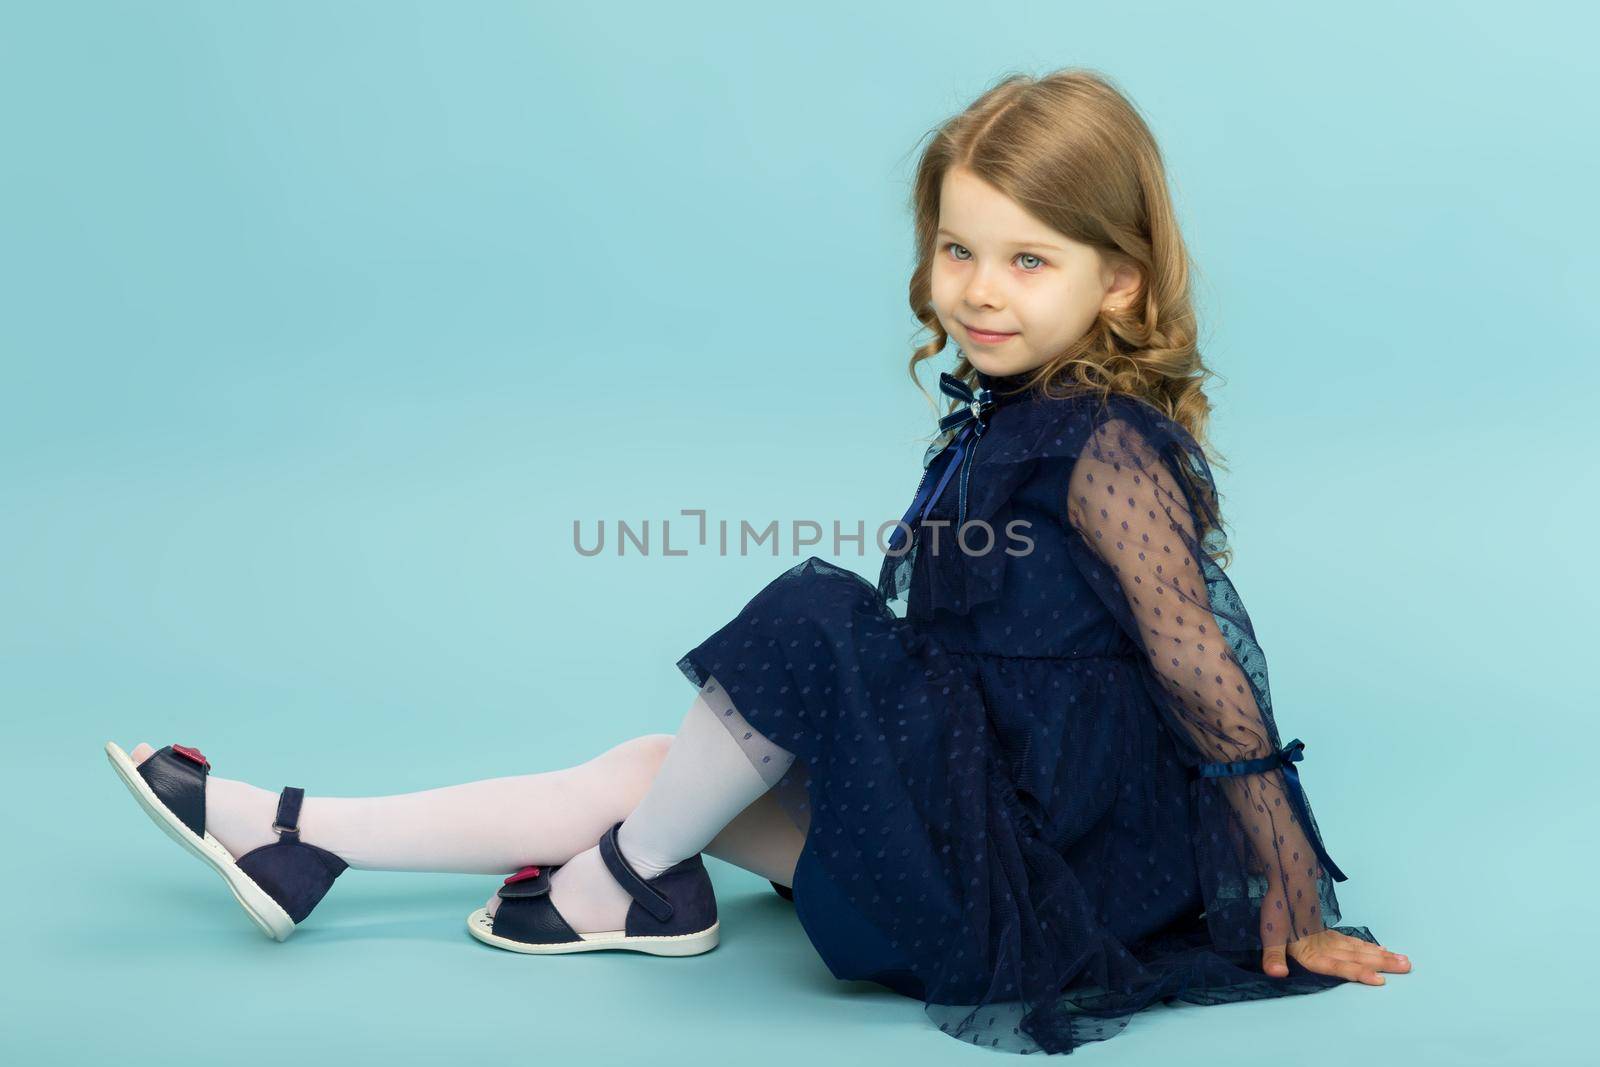 Happy little girl in blue dress sitting on floor. Portrait of adorable blonde girl wearing beautiful lace dress sitting sideways to camera on light blue background in studio.